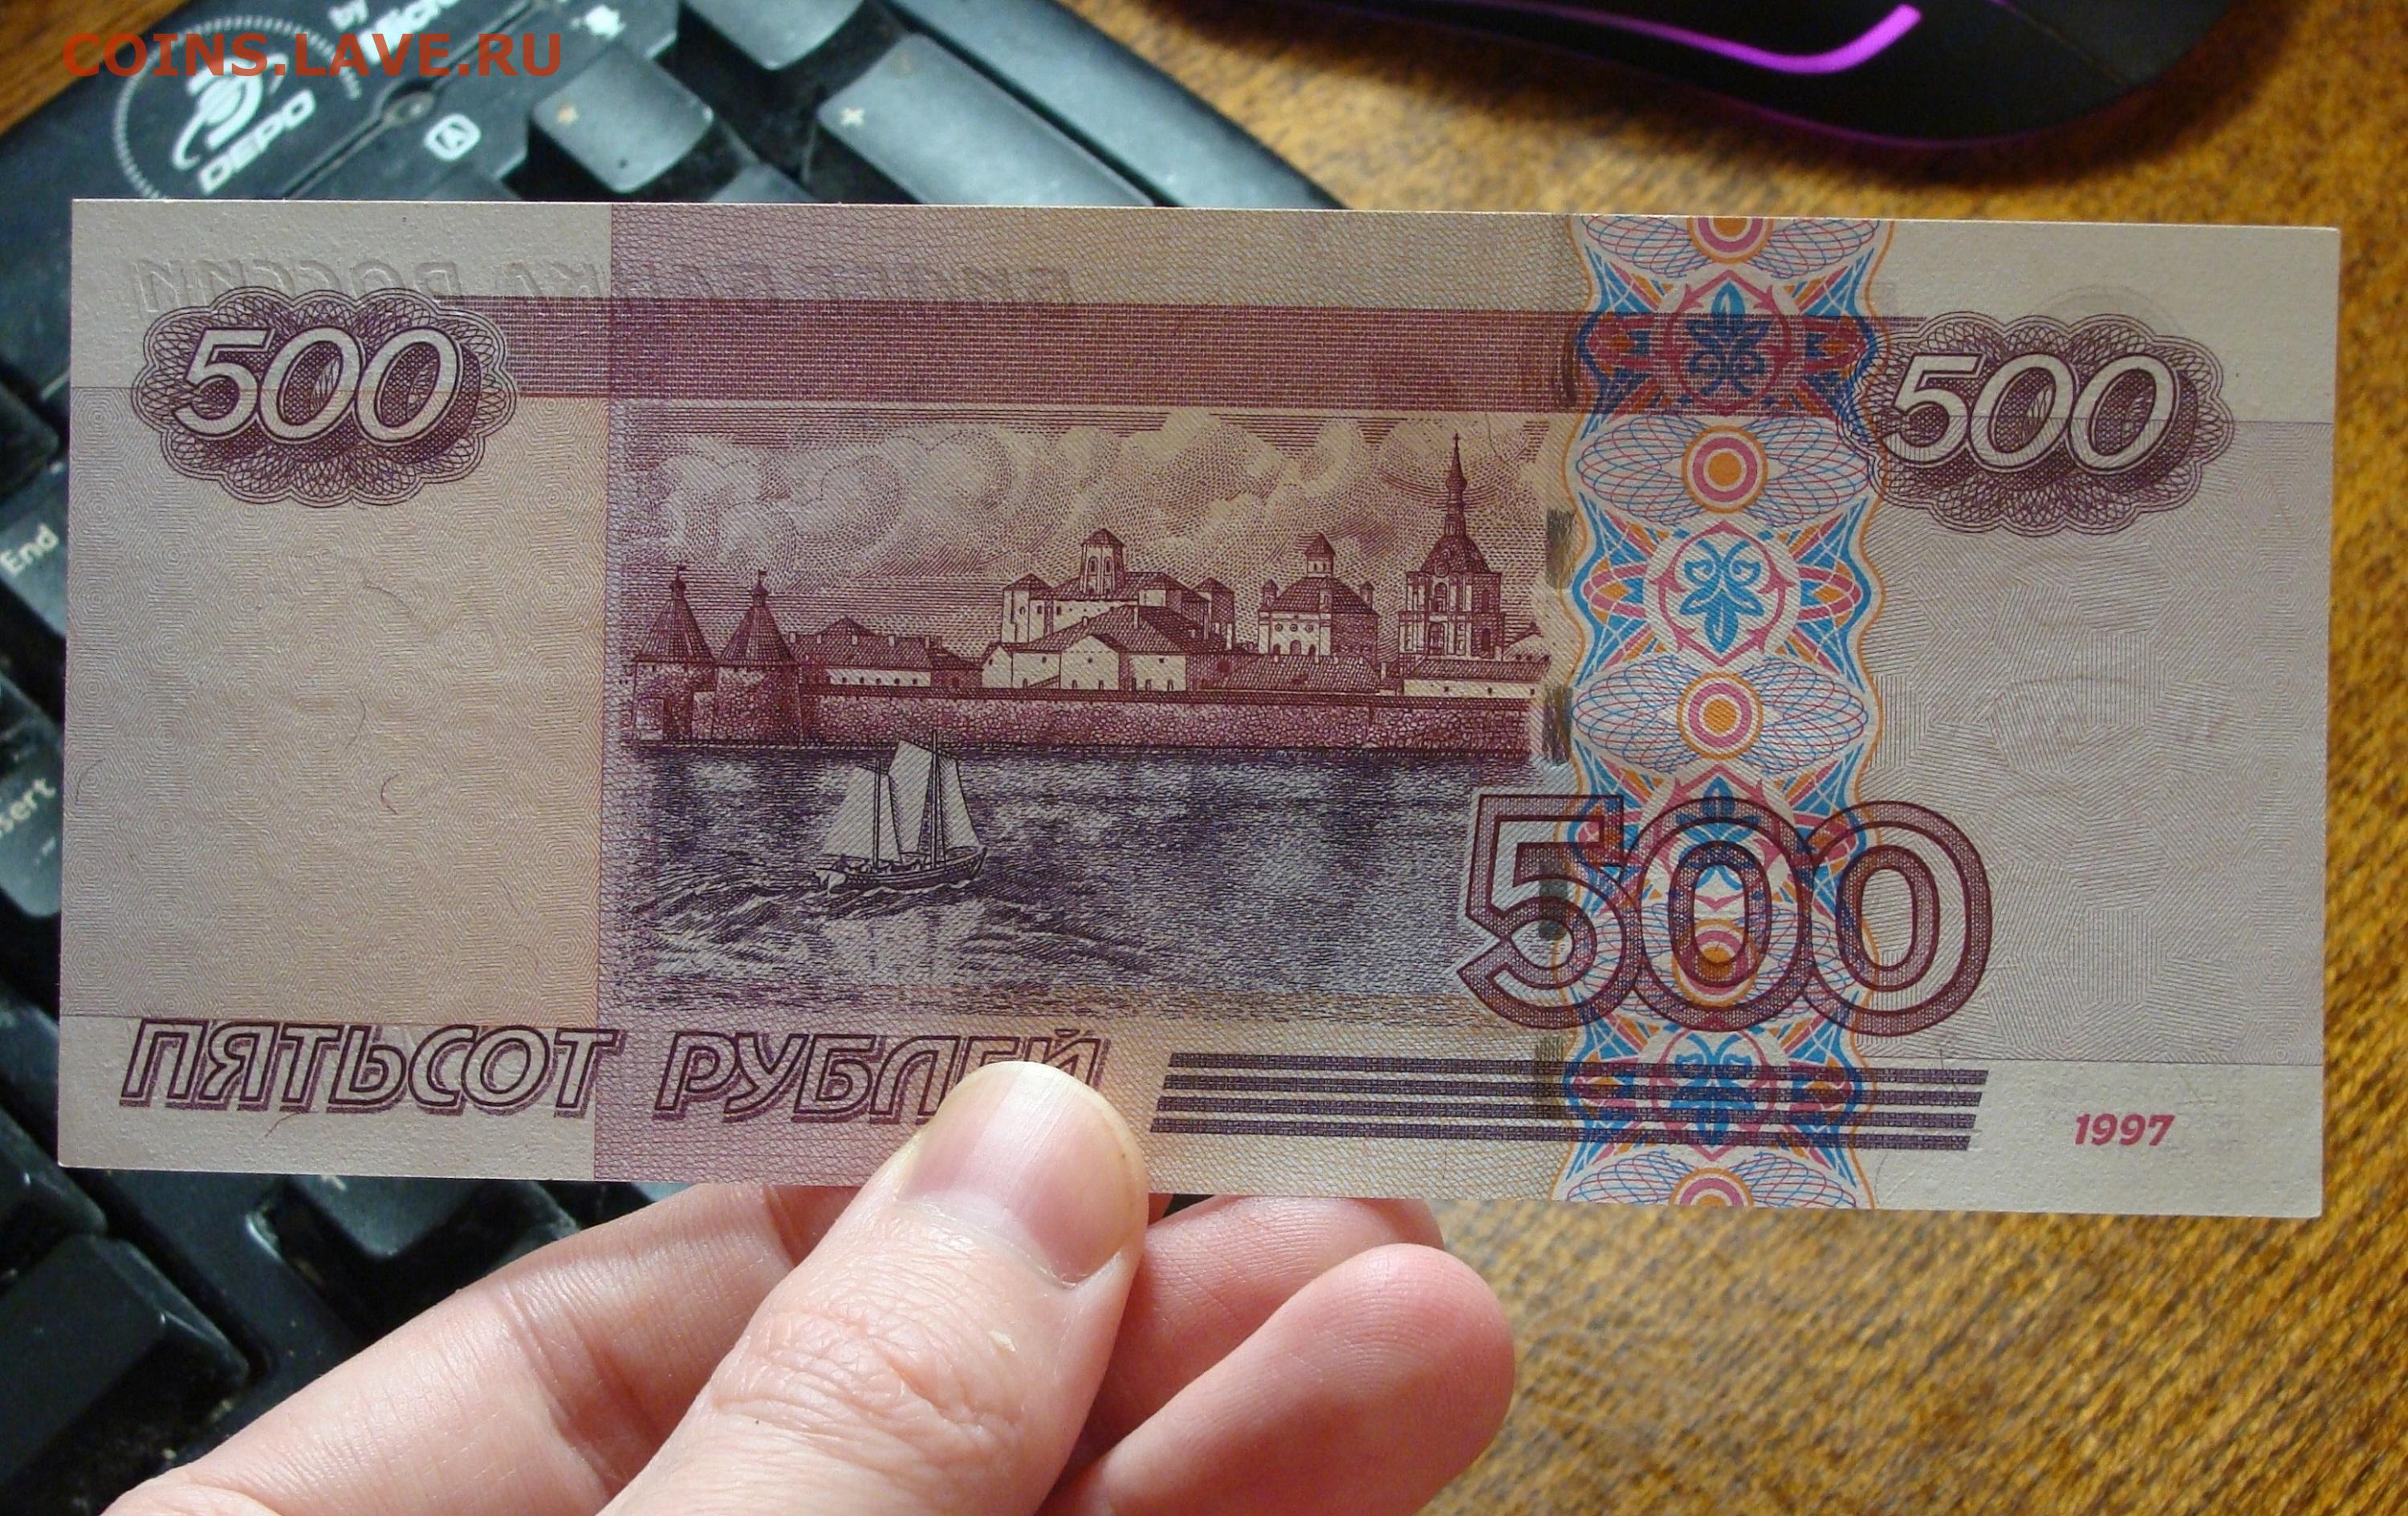 Н 500 рублей. 500 Рублей 1997. 500 Рублей 1997г. Пятьсот рублей 1997. 500 Рублей 1997 (модификация 2004 года).